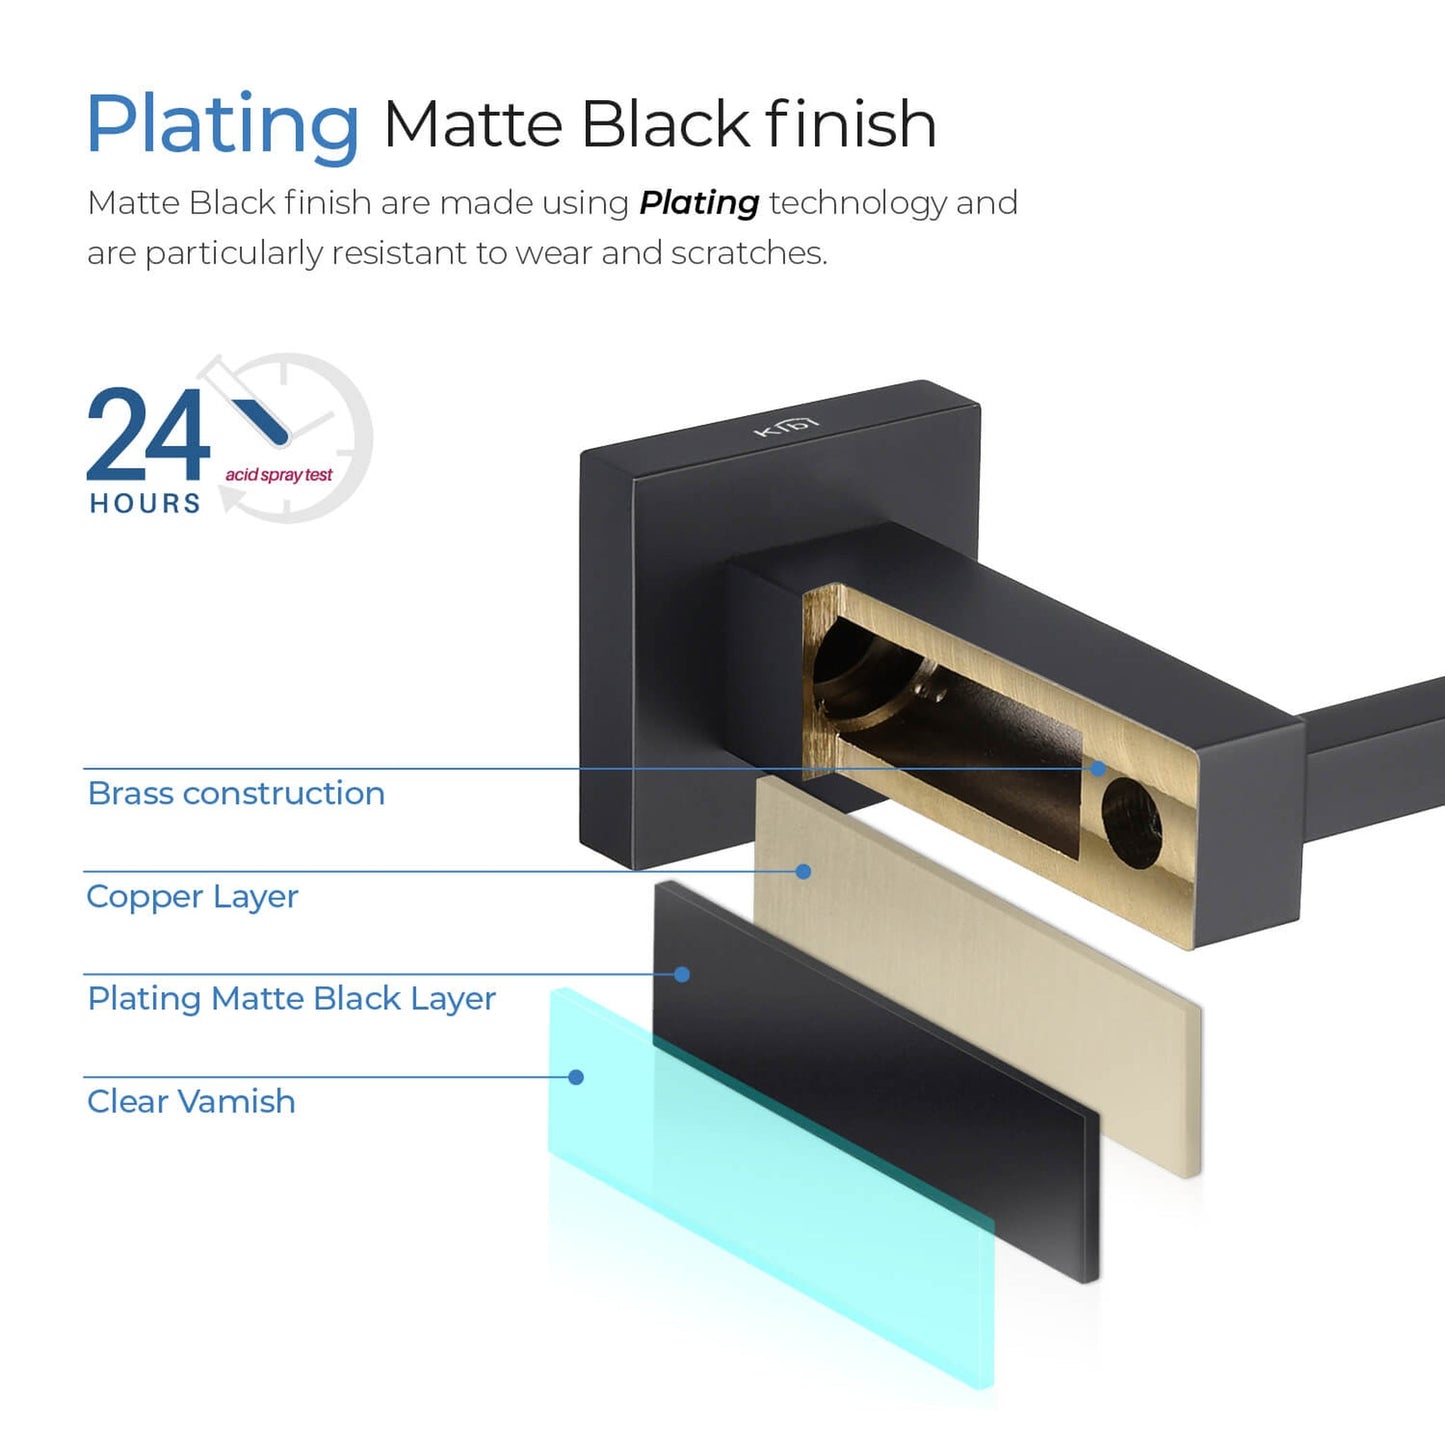 KIBI Cube Brass 4 Piece Bathroom Hardware Set in Matte Black Finish